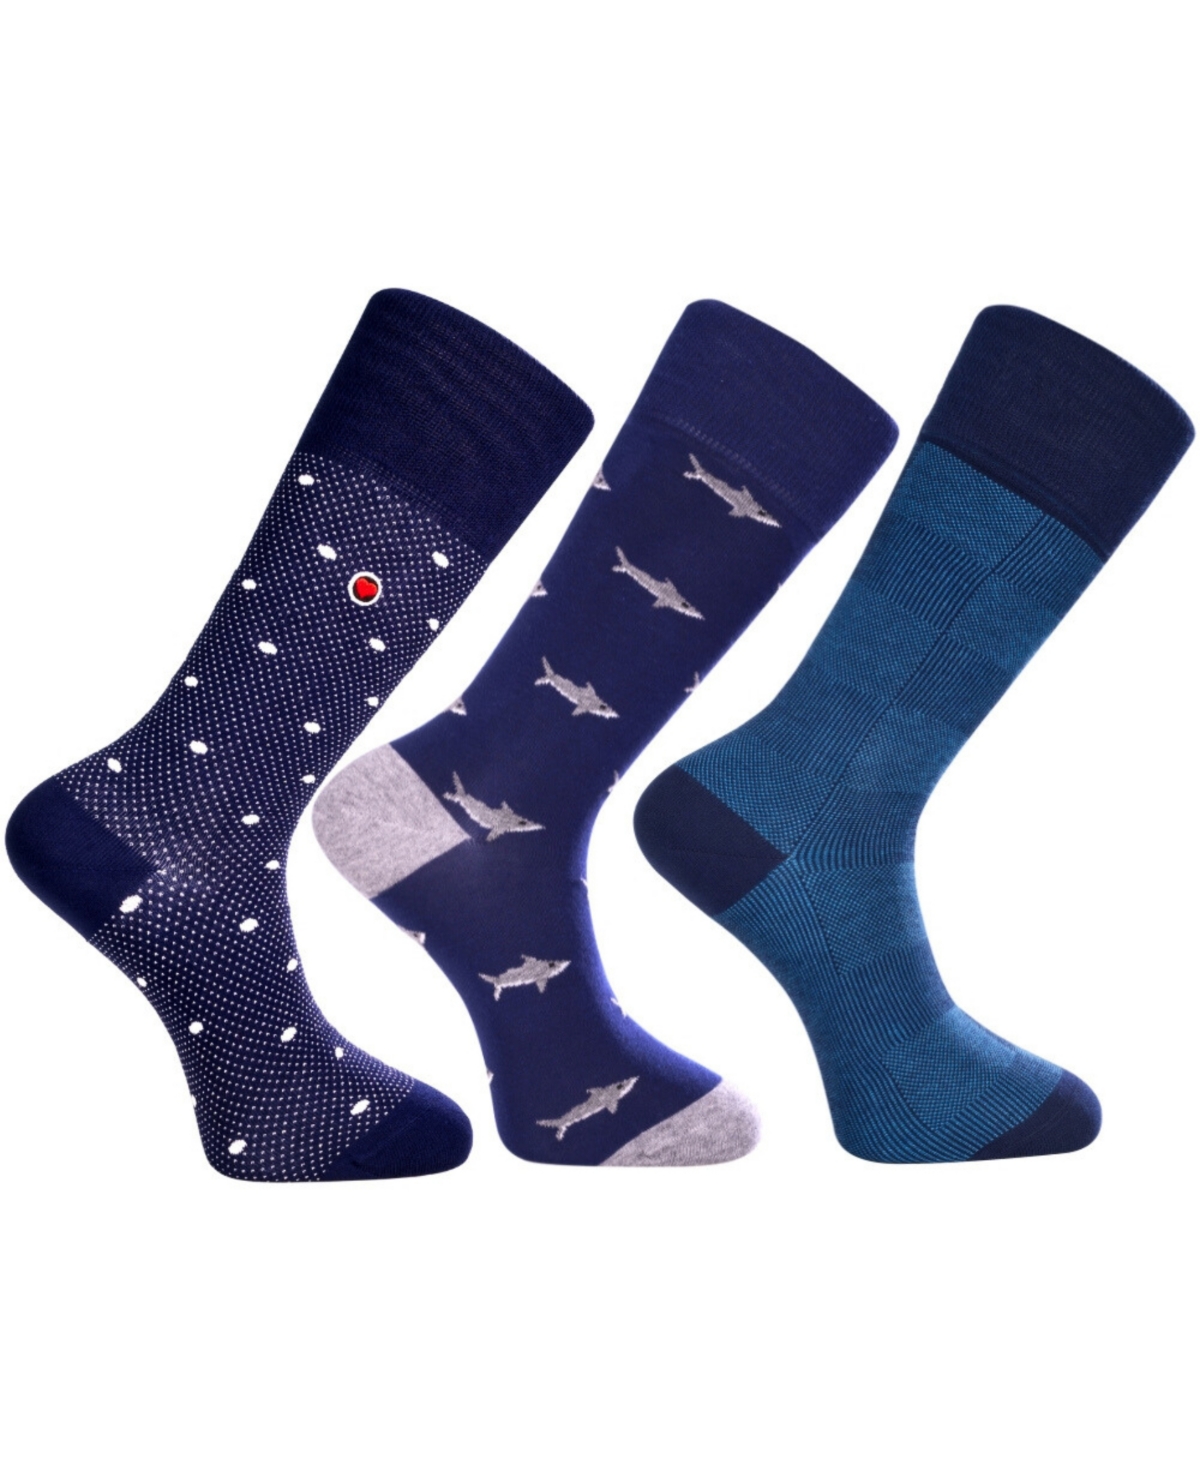 Love Sock Company Men's Atlantic Bundle Luxury Mid-calf Dress Socks With Seamless Toe Design, Pack Of 3 In Multi Color